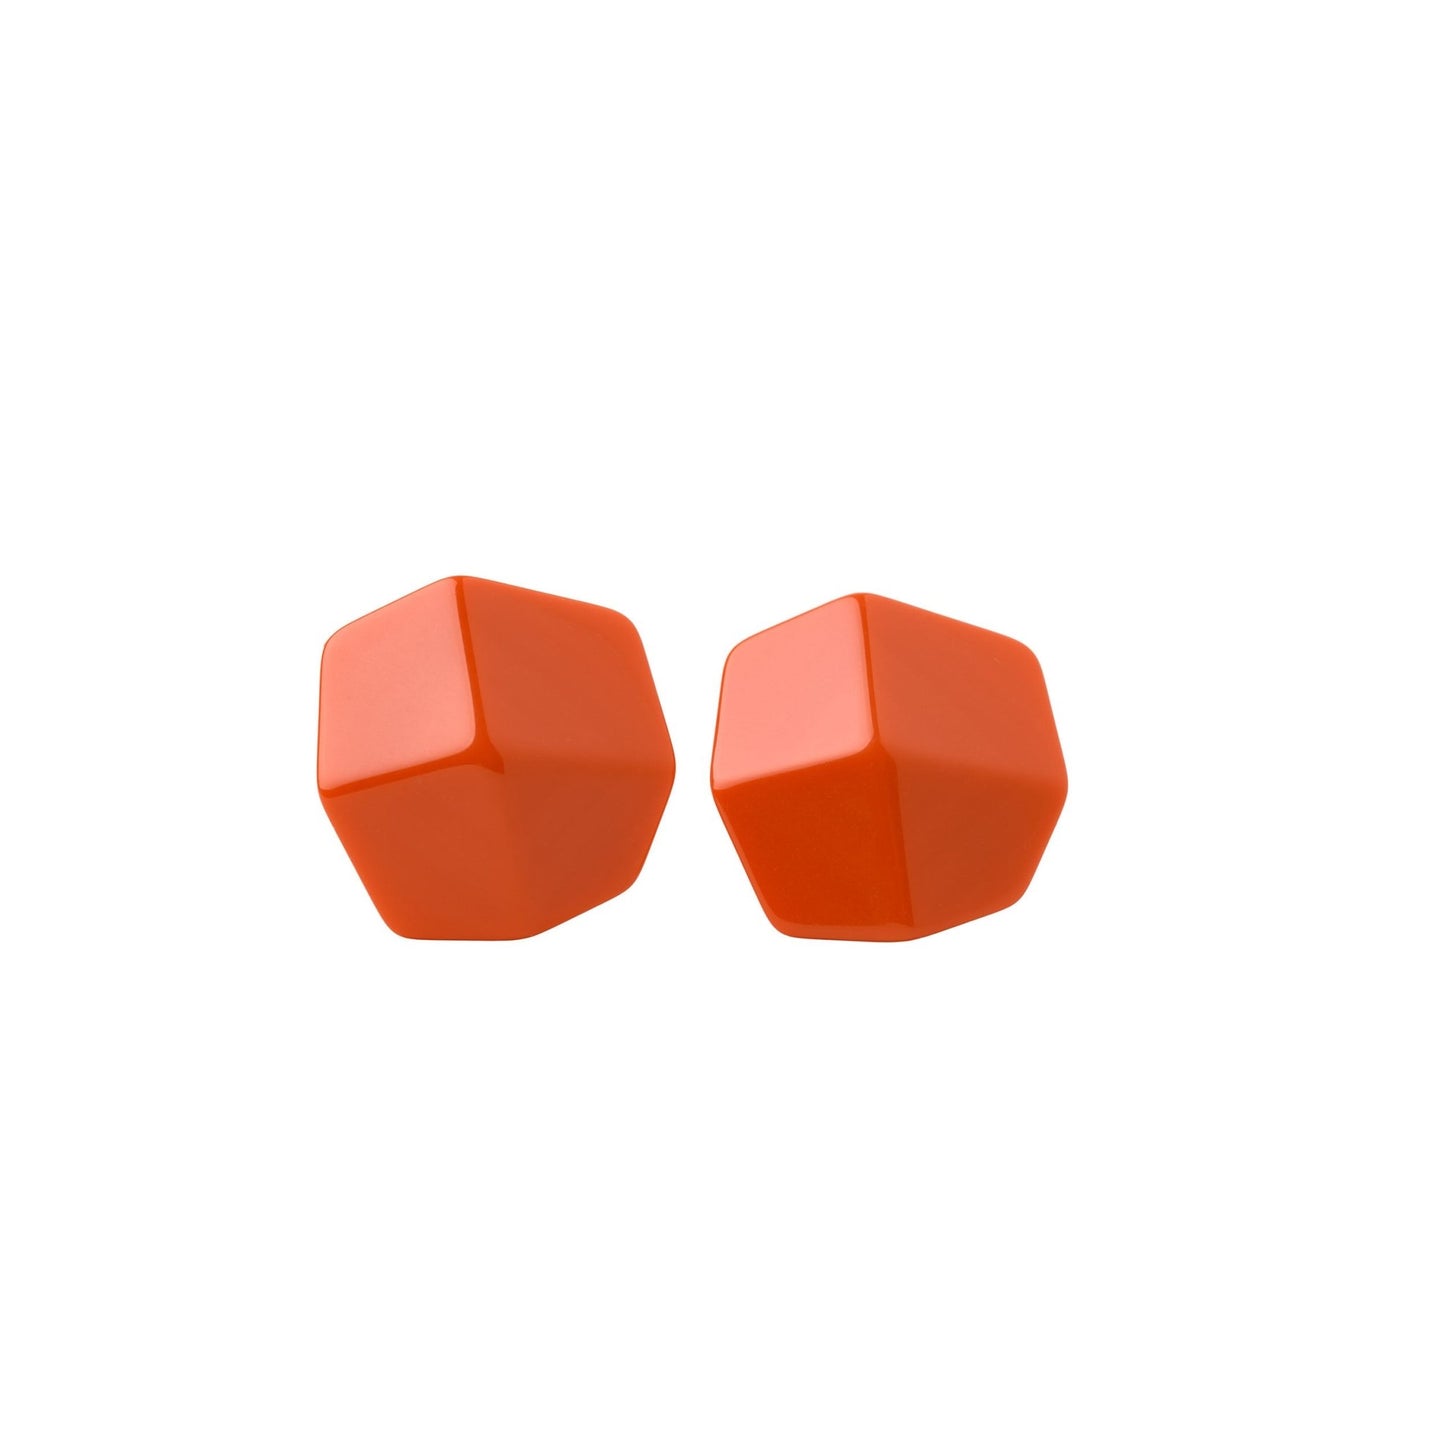 Mini Sculpture Stud Earrings in Bright Orange